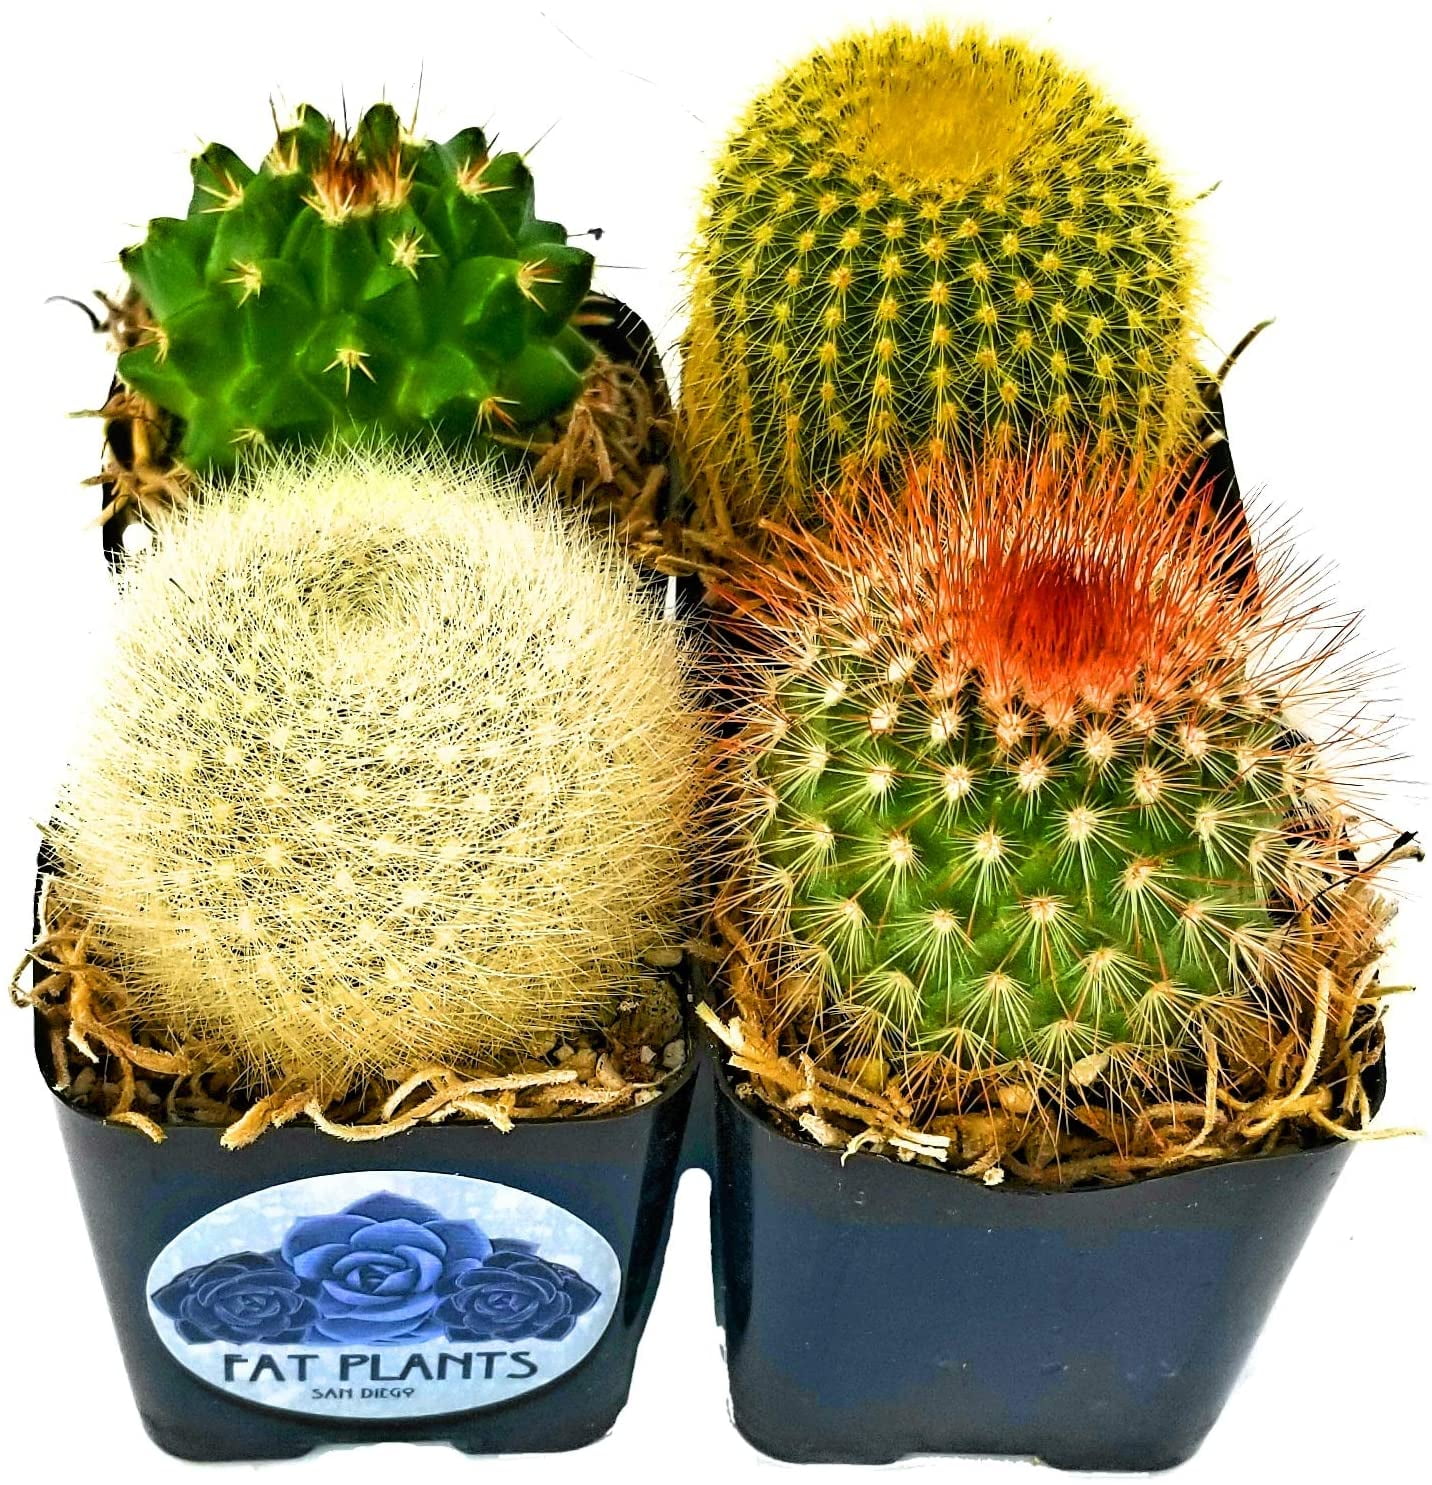 Fat Plants San Diego Mini Cactus Plants in Plastic Planters 